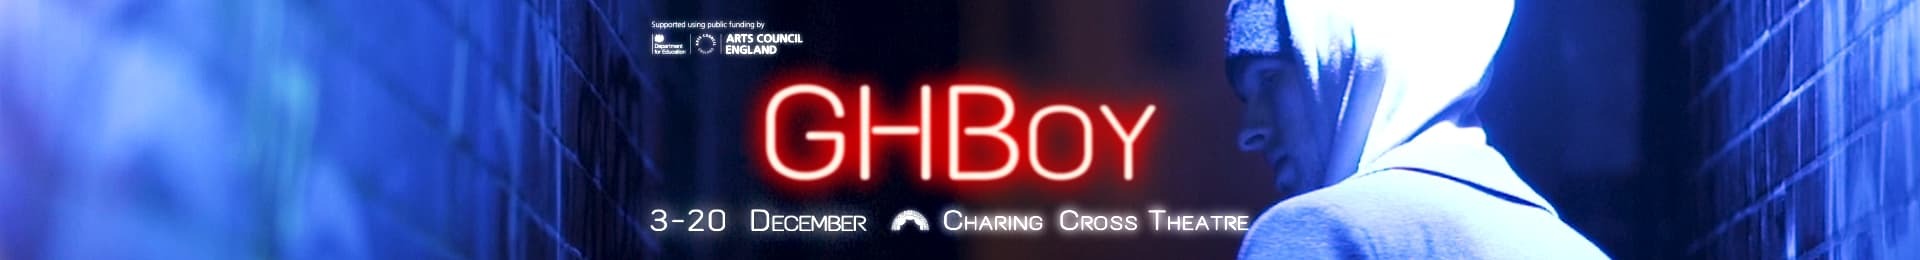 GHBoy banner image